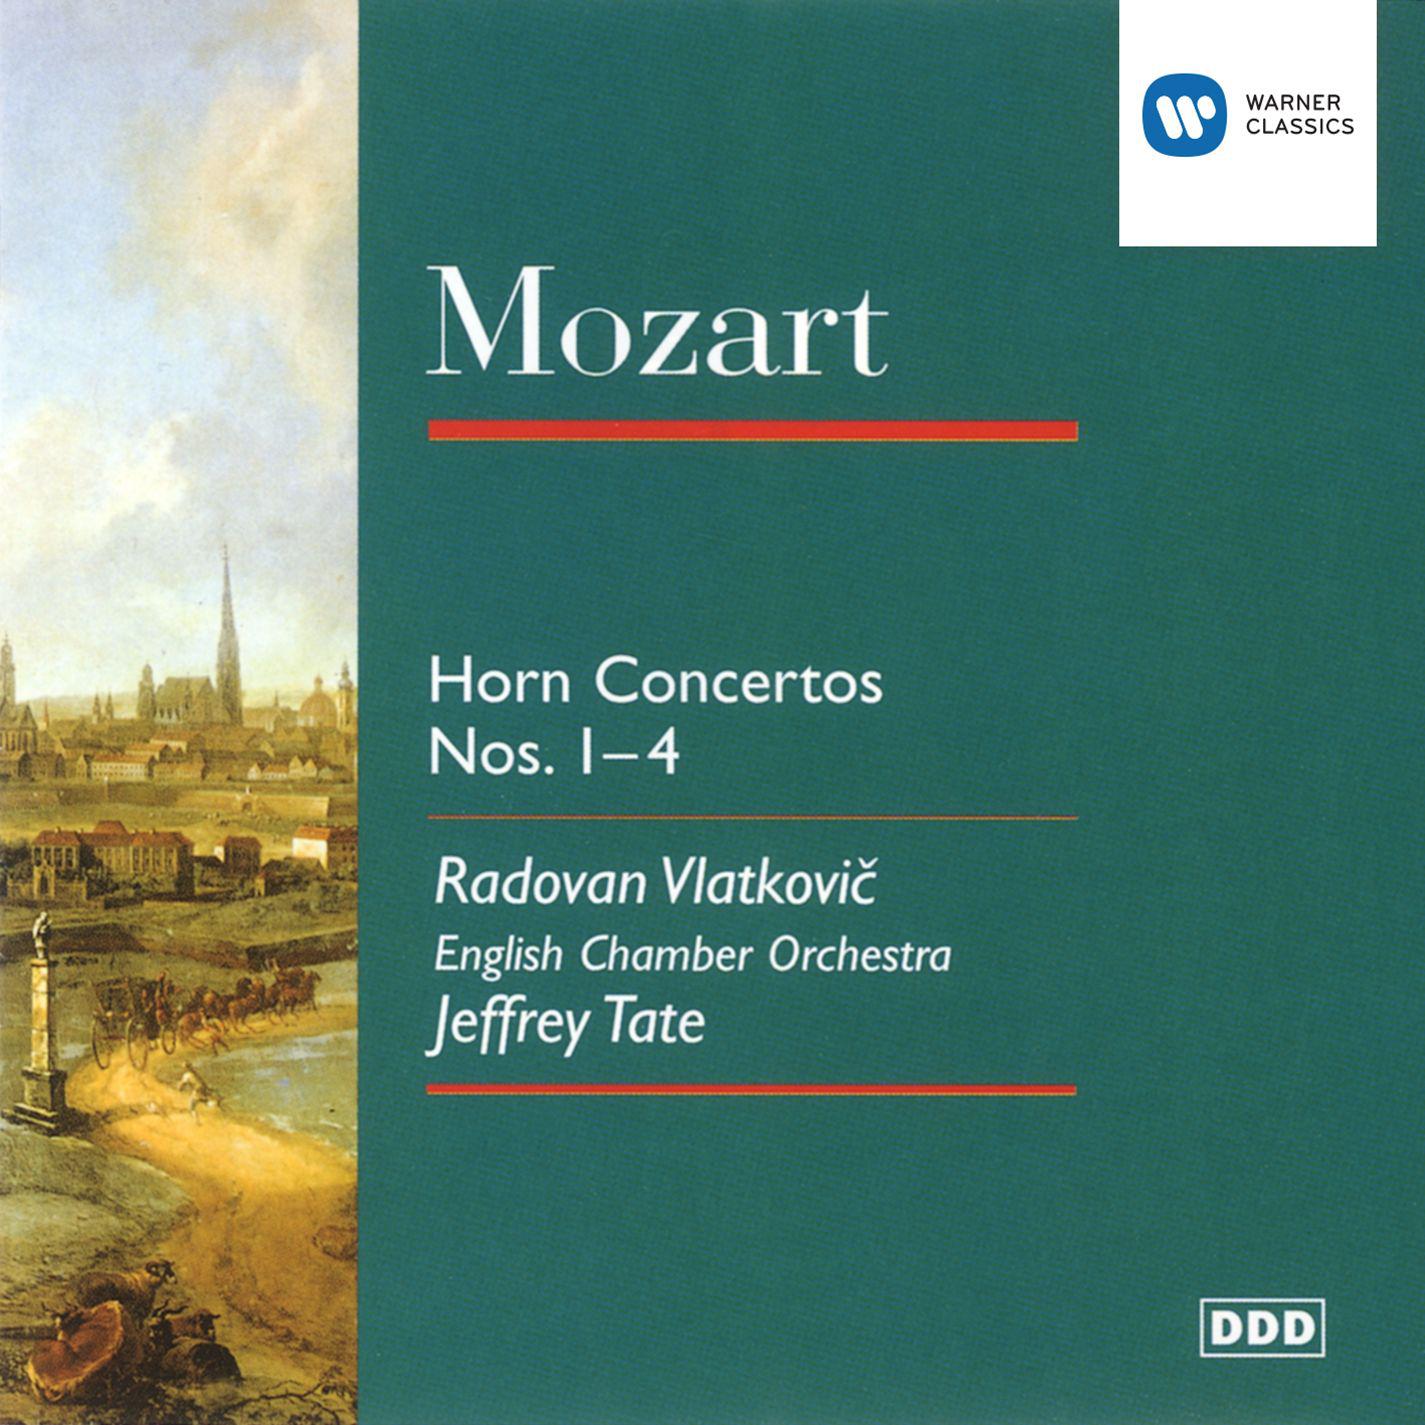 Horn Concerto No. 1 in D K412: I. Allegro